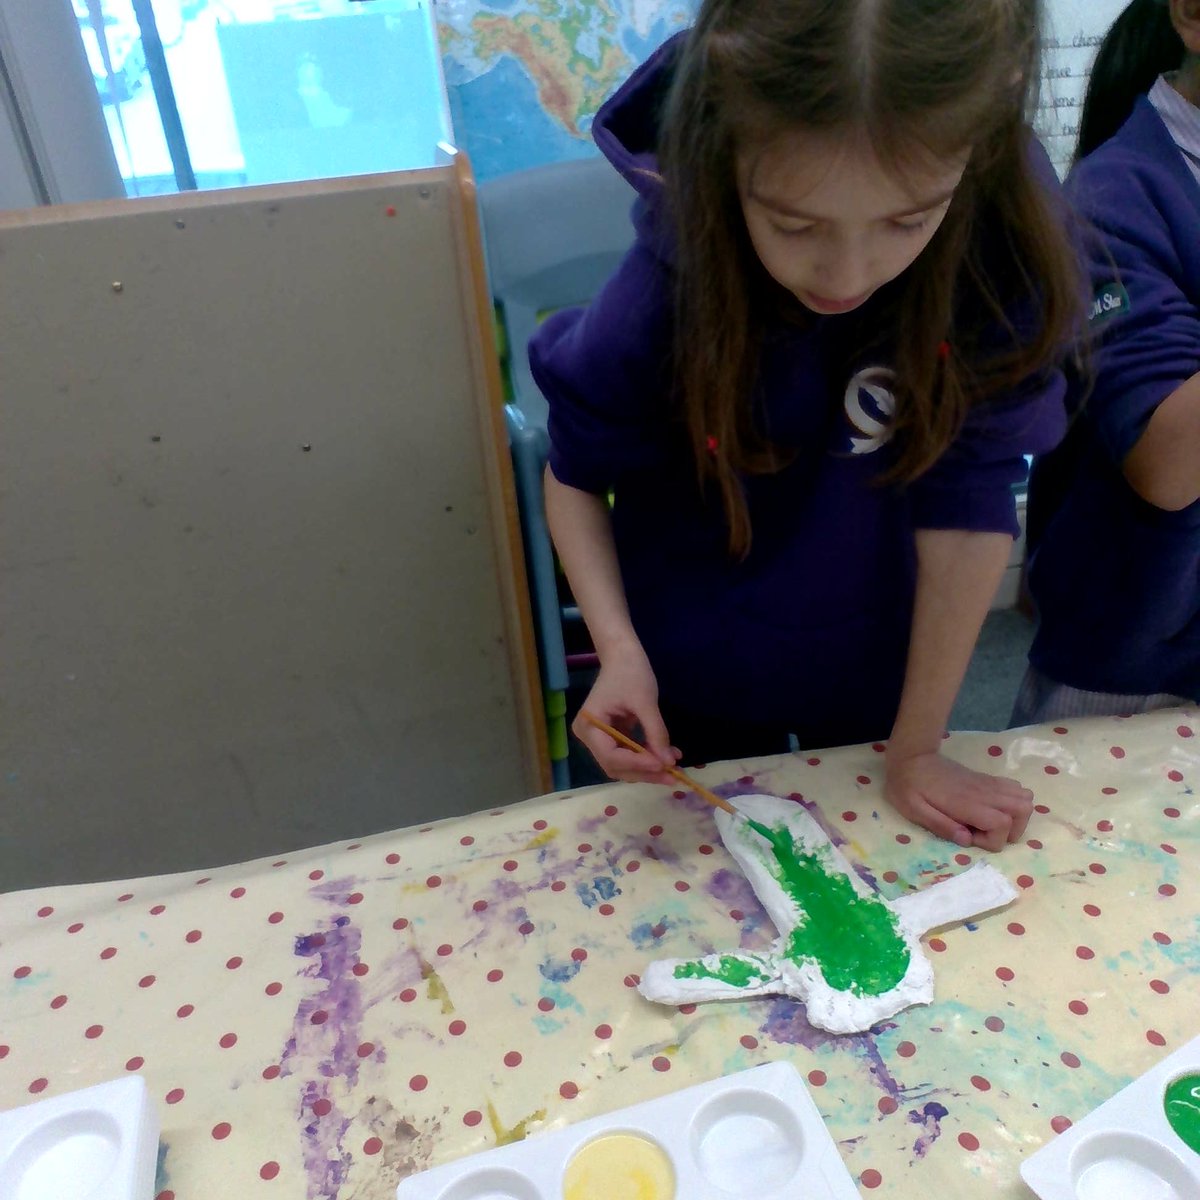 Elder class have been painting their modroc models this afternoon. #art #teachingart